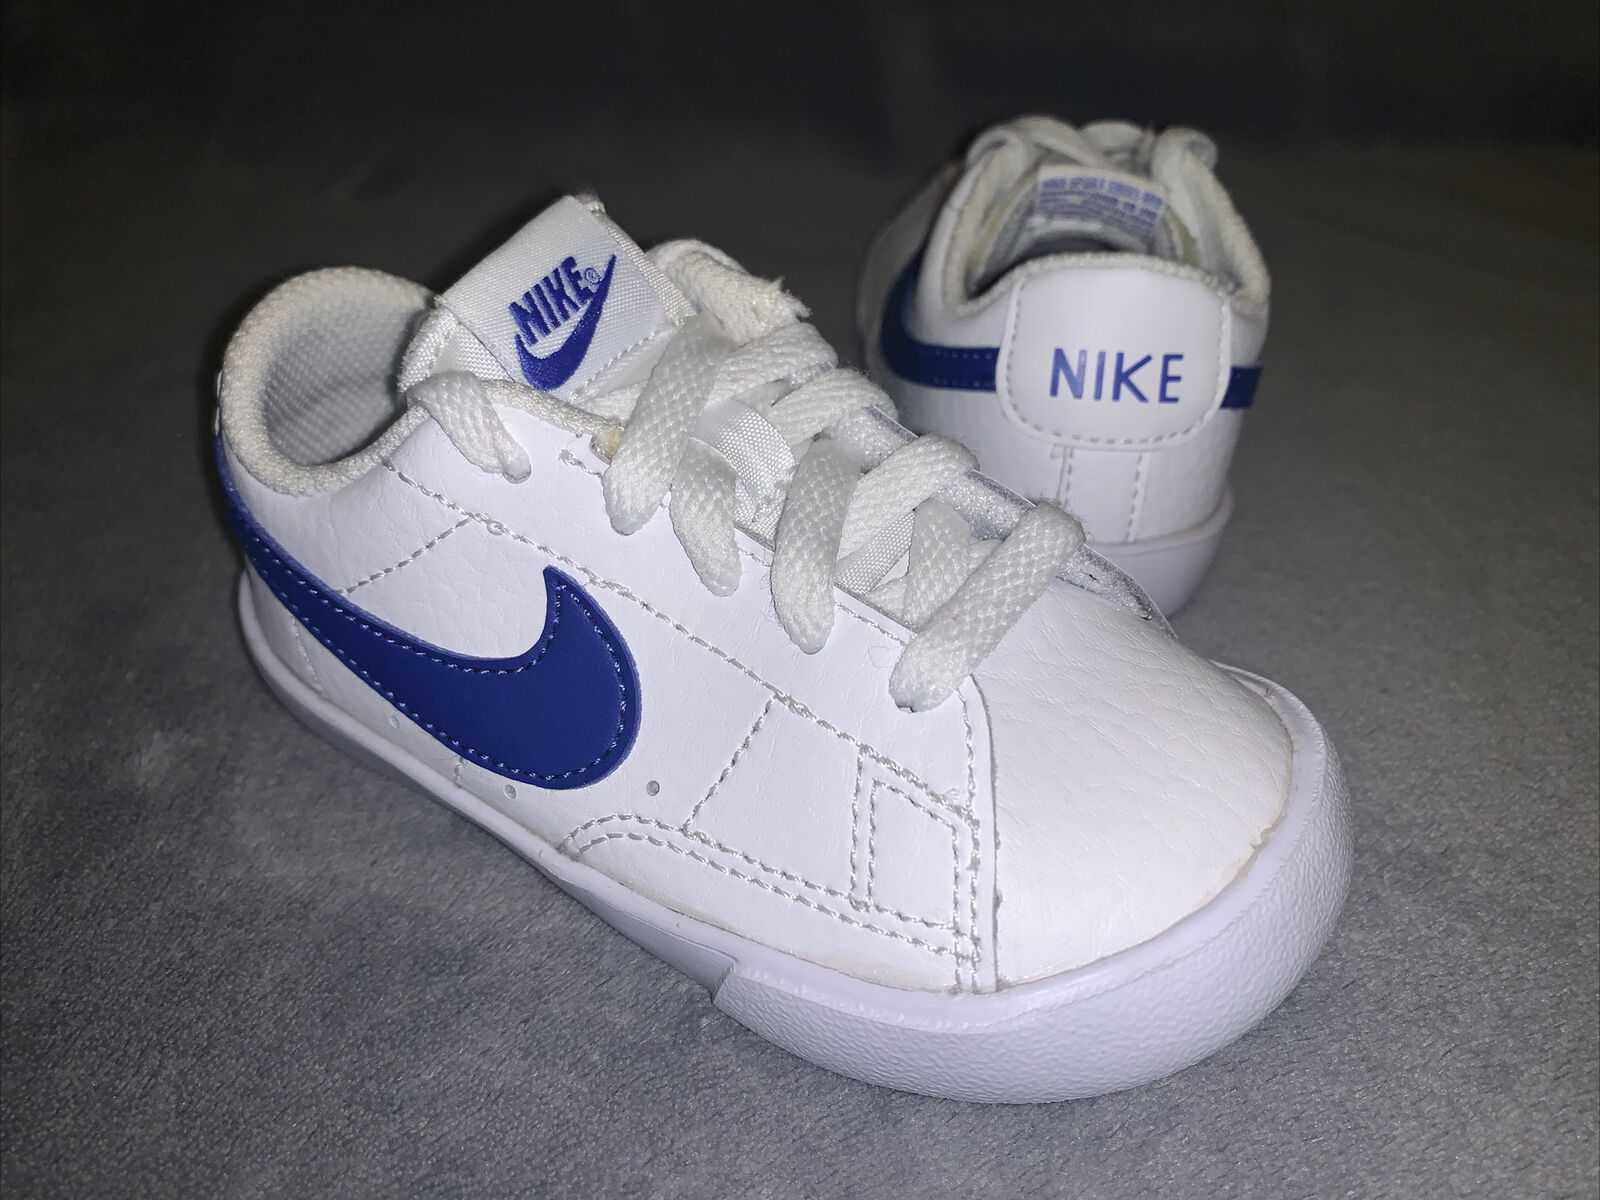 Toddler Nike Blazer Low Athletic Shoes - White/Blue - Size 6C